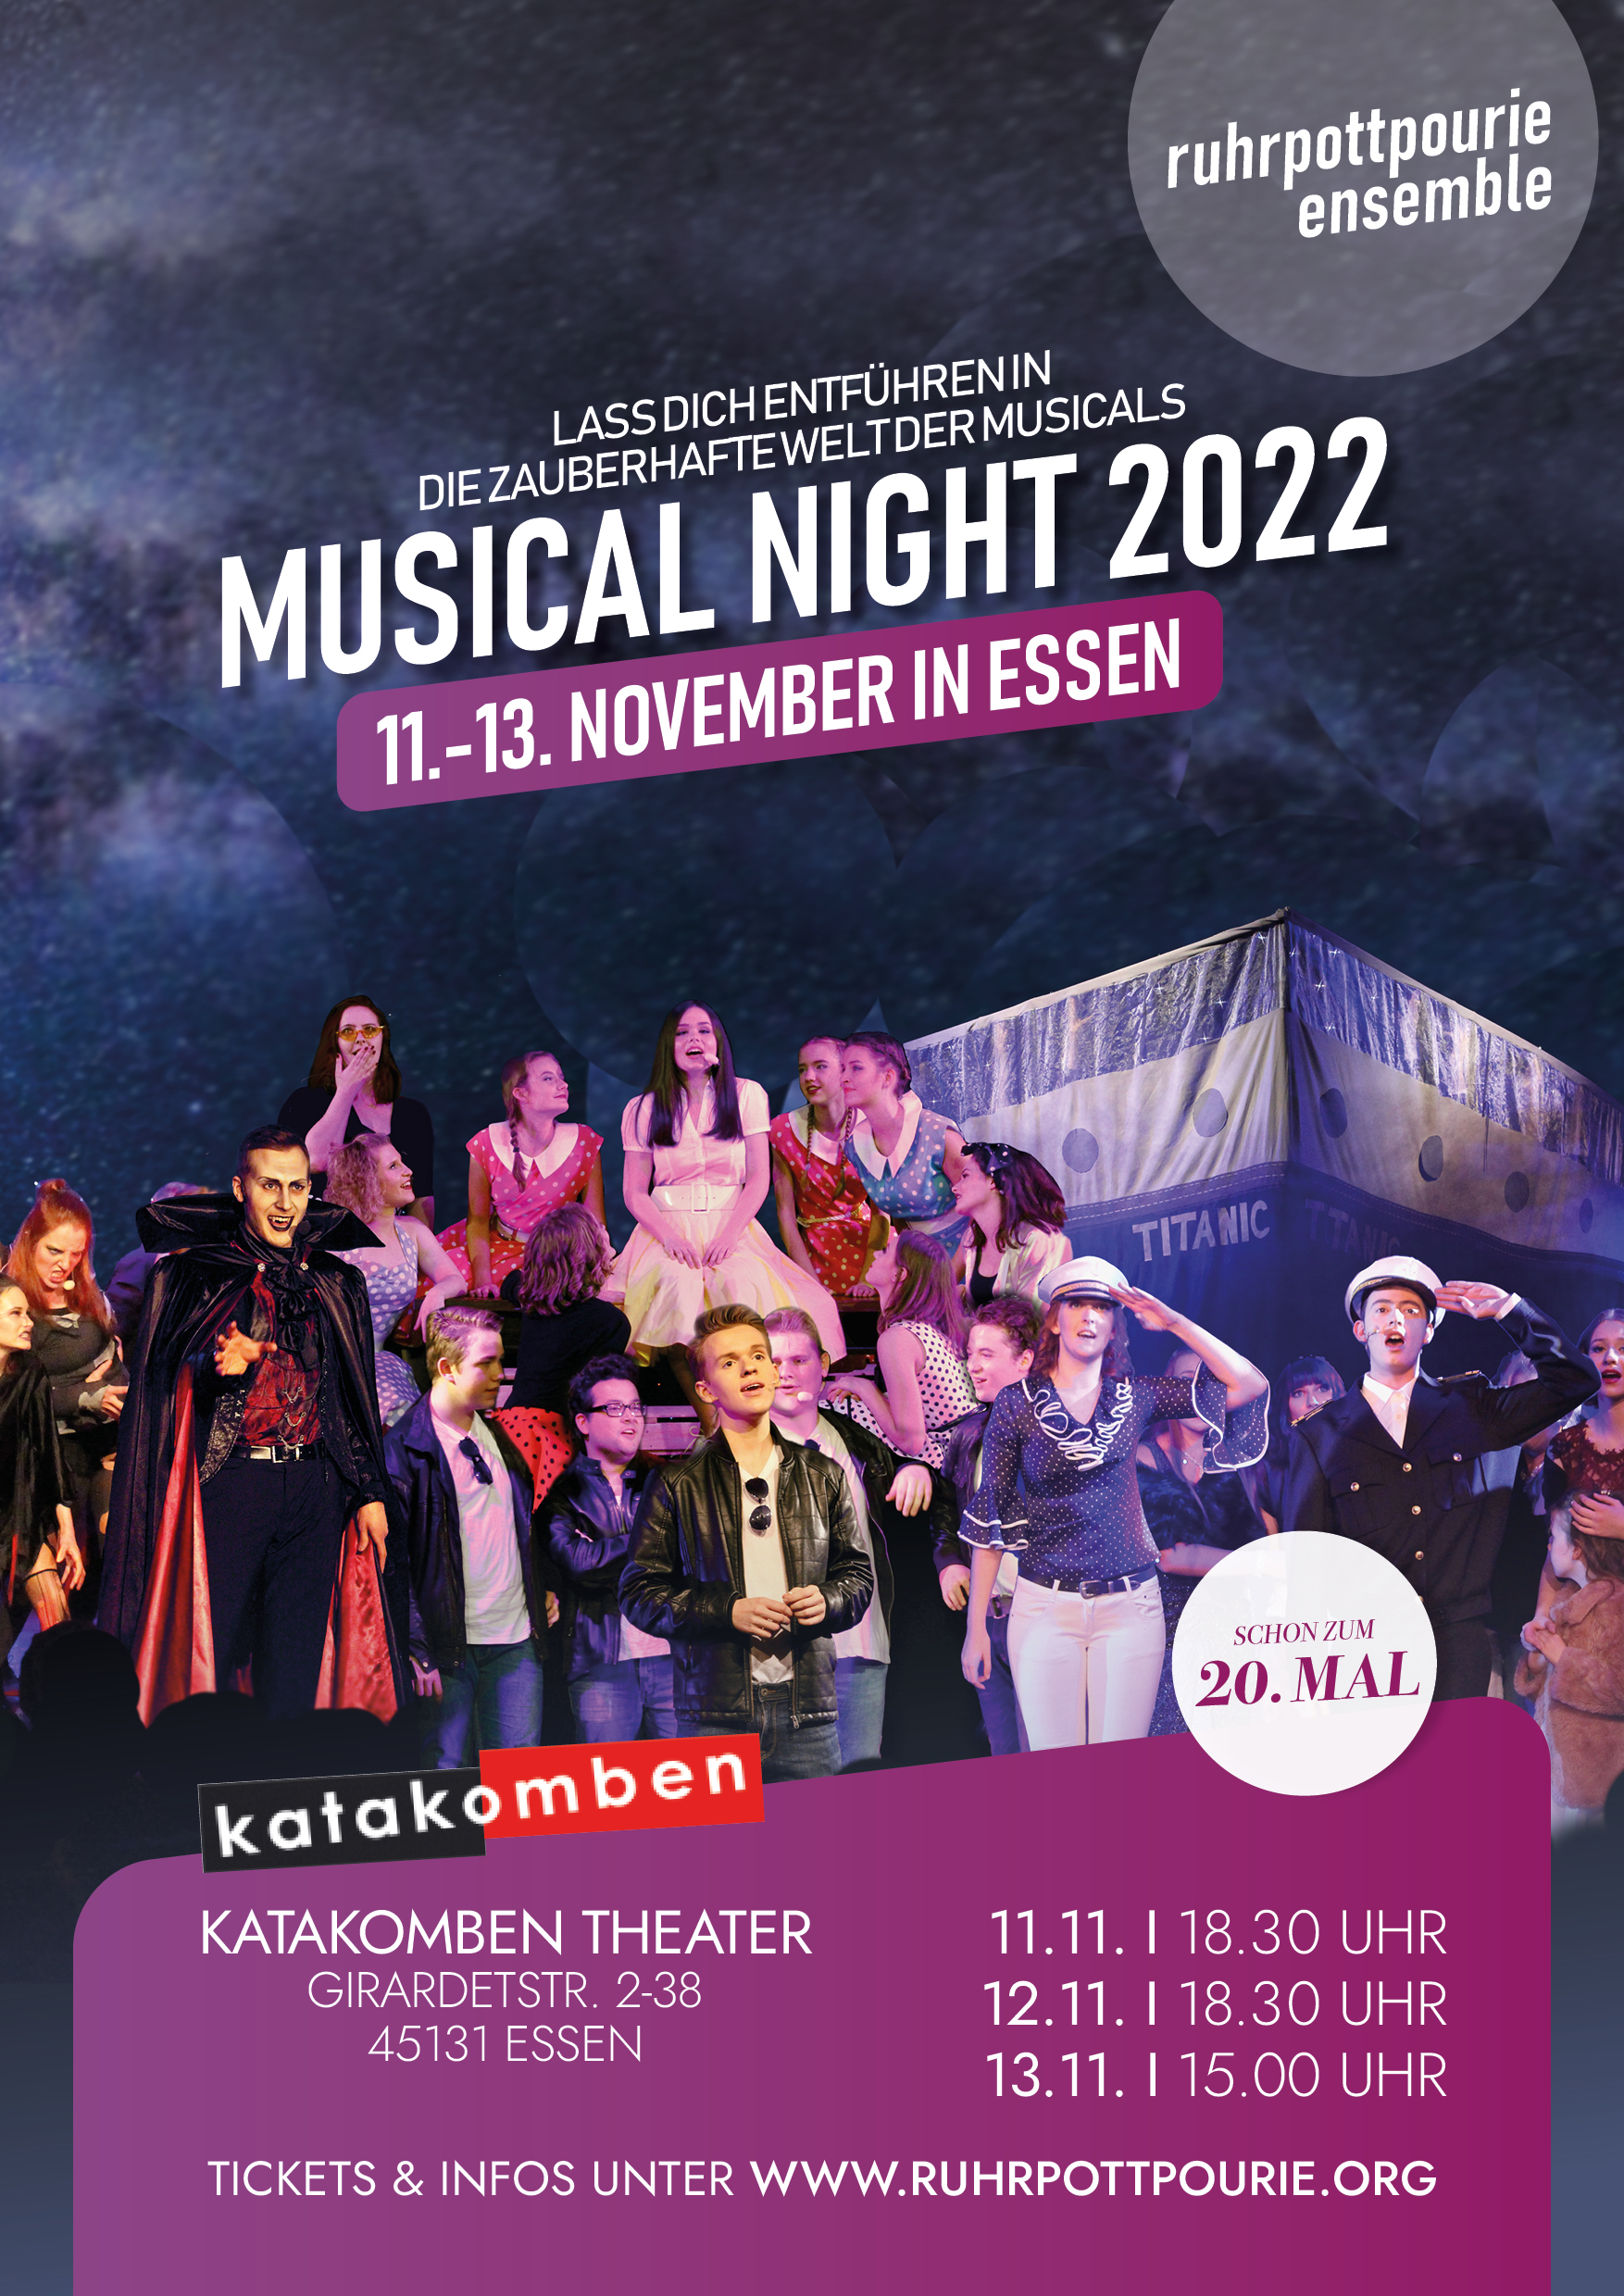 musicalnight2022-katakombentheater